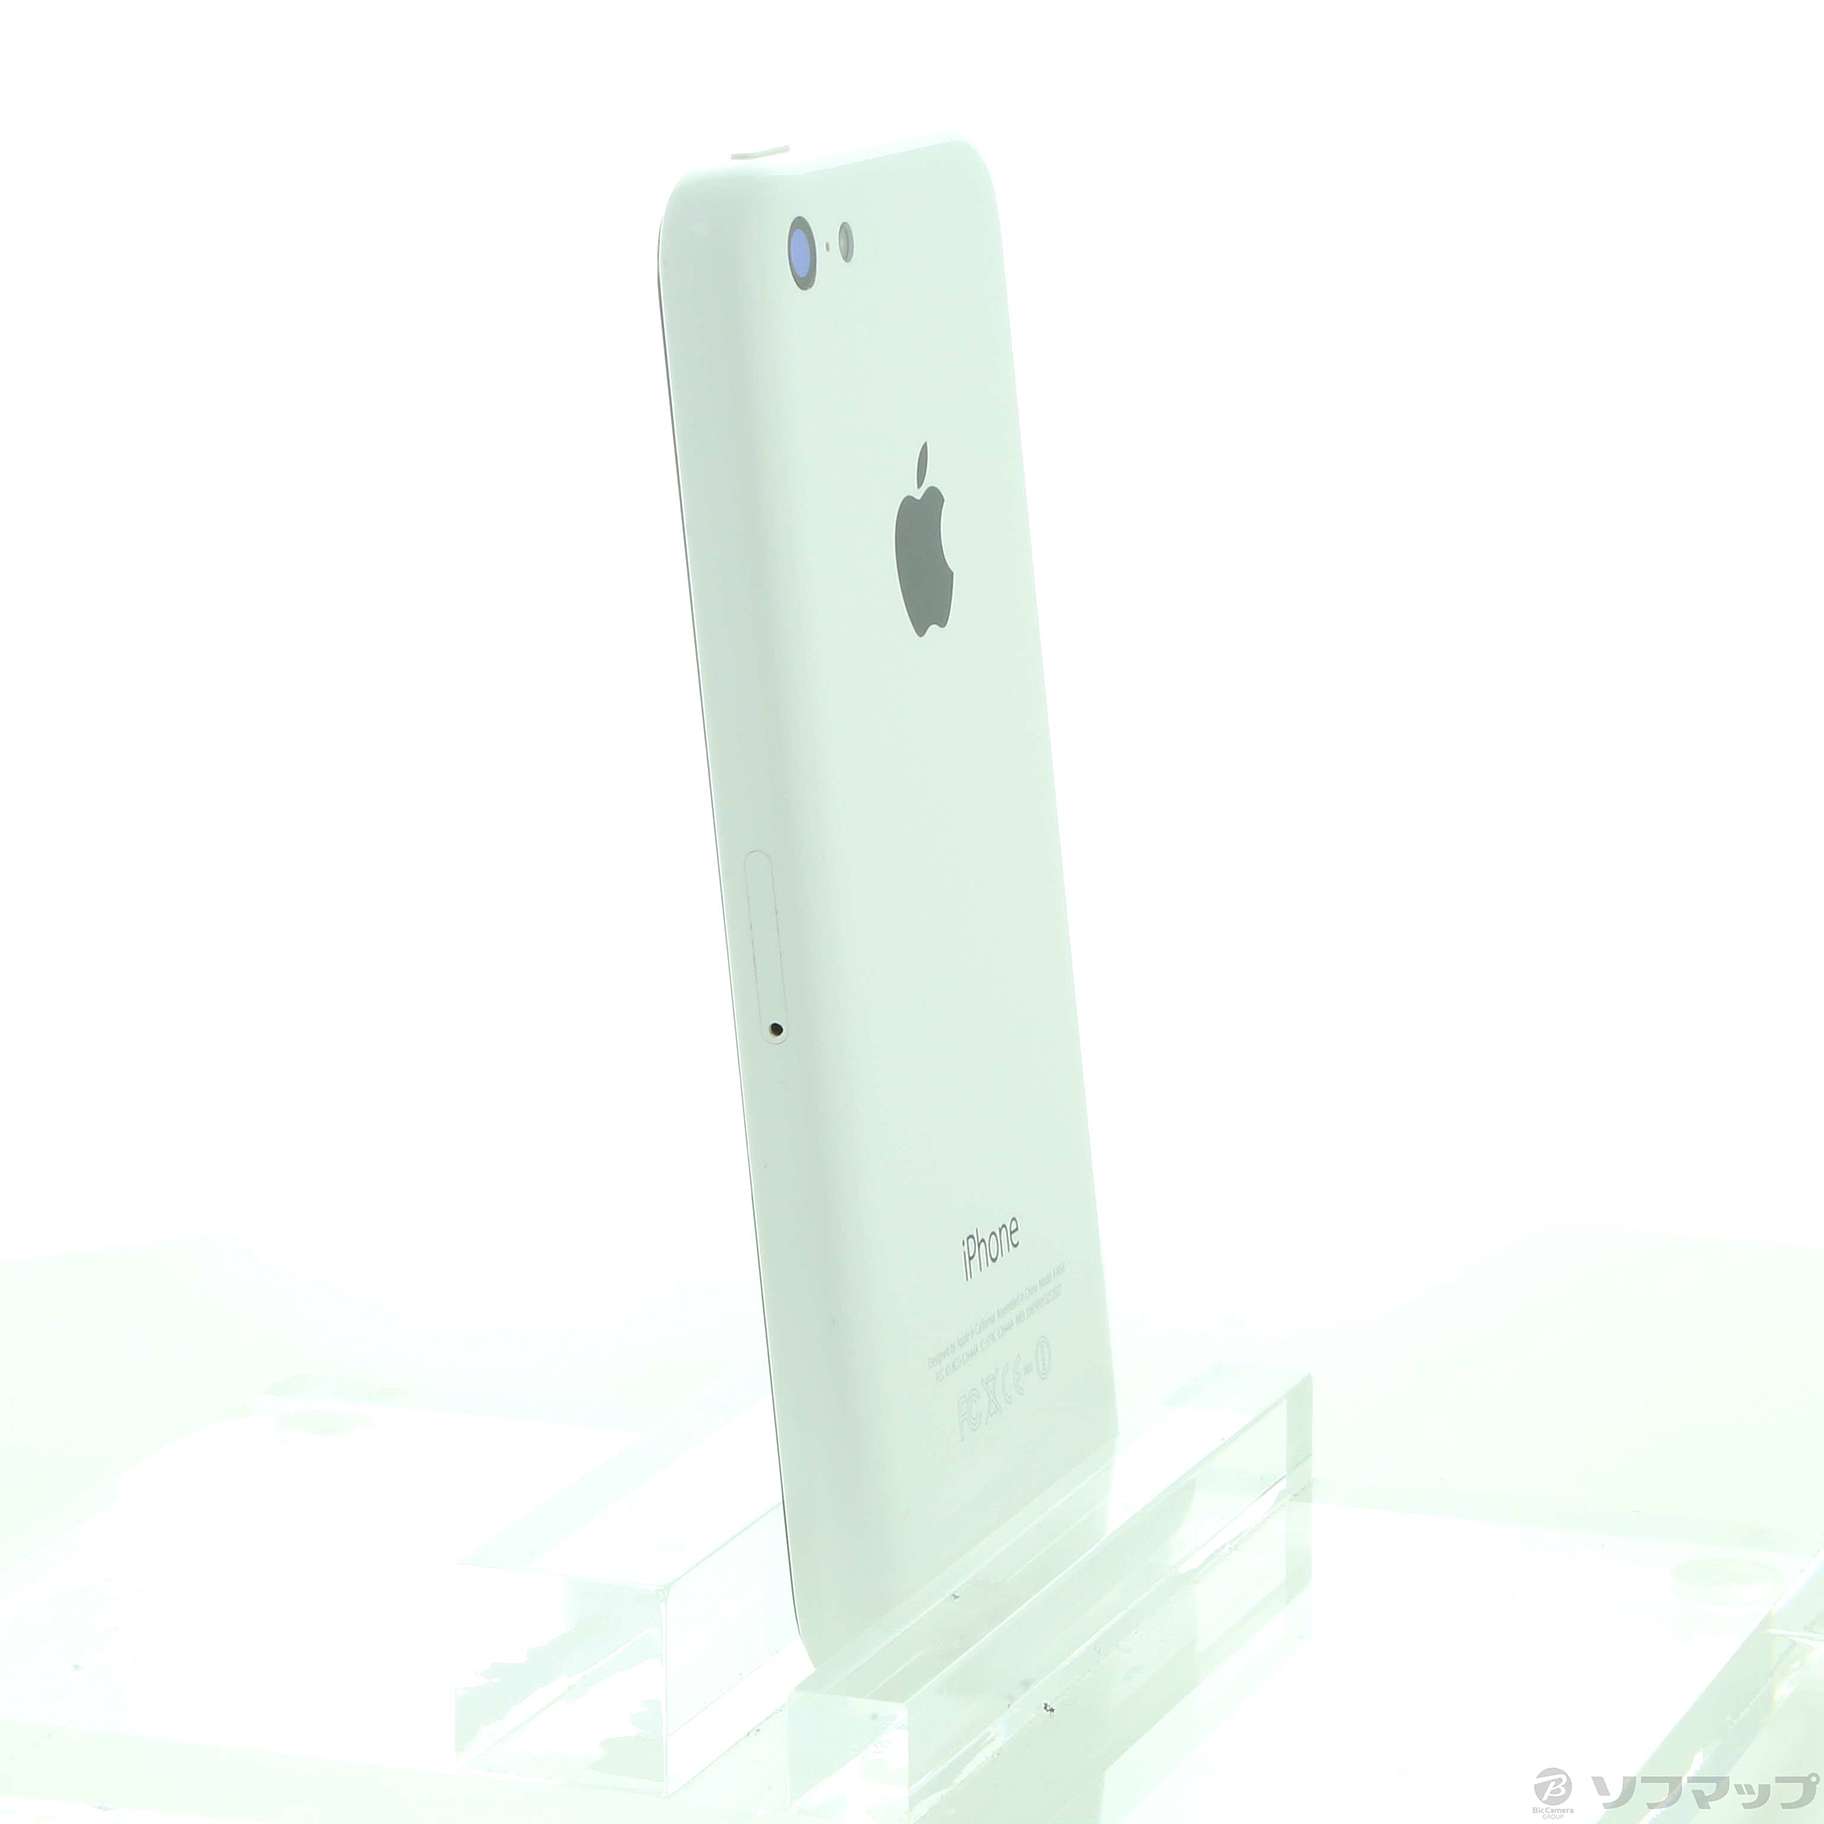 iPhone 5c White 16GB Softbank 75％以上節約 - スマートフォン本体